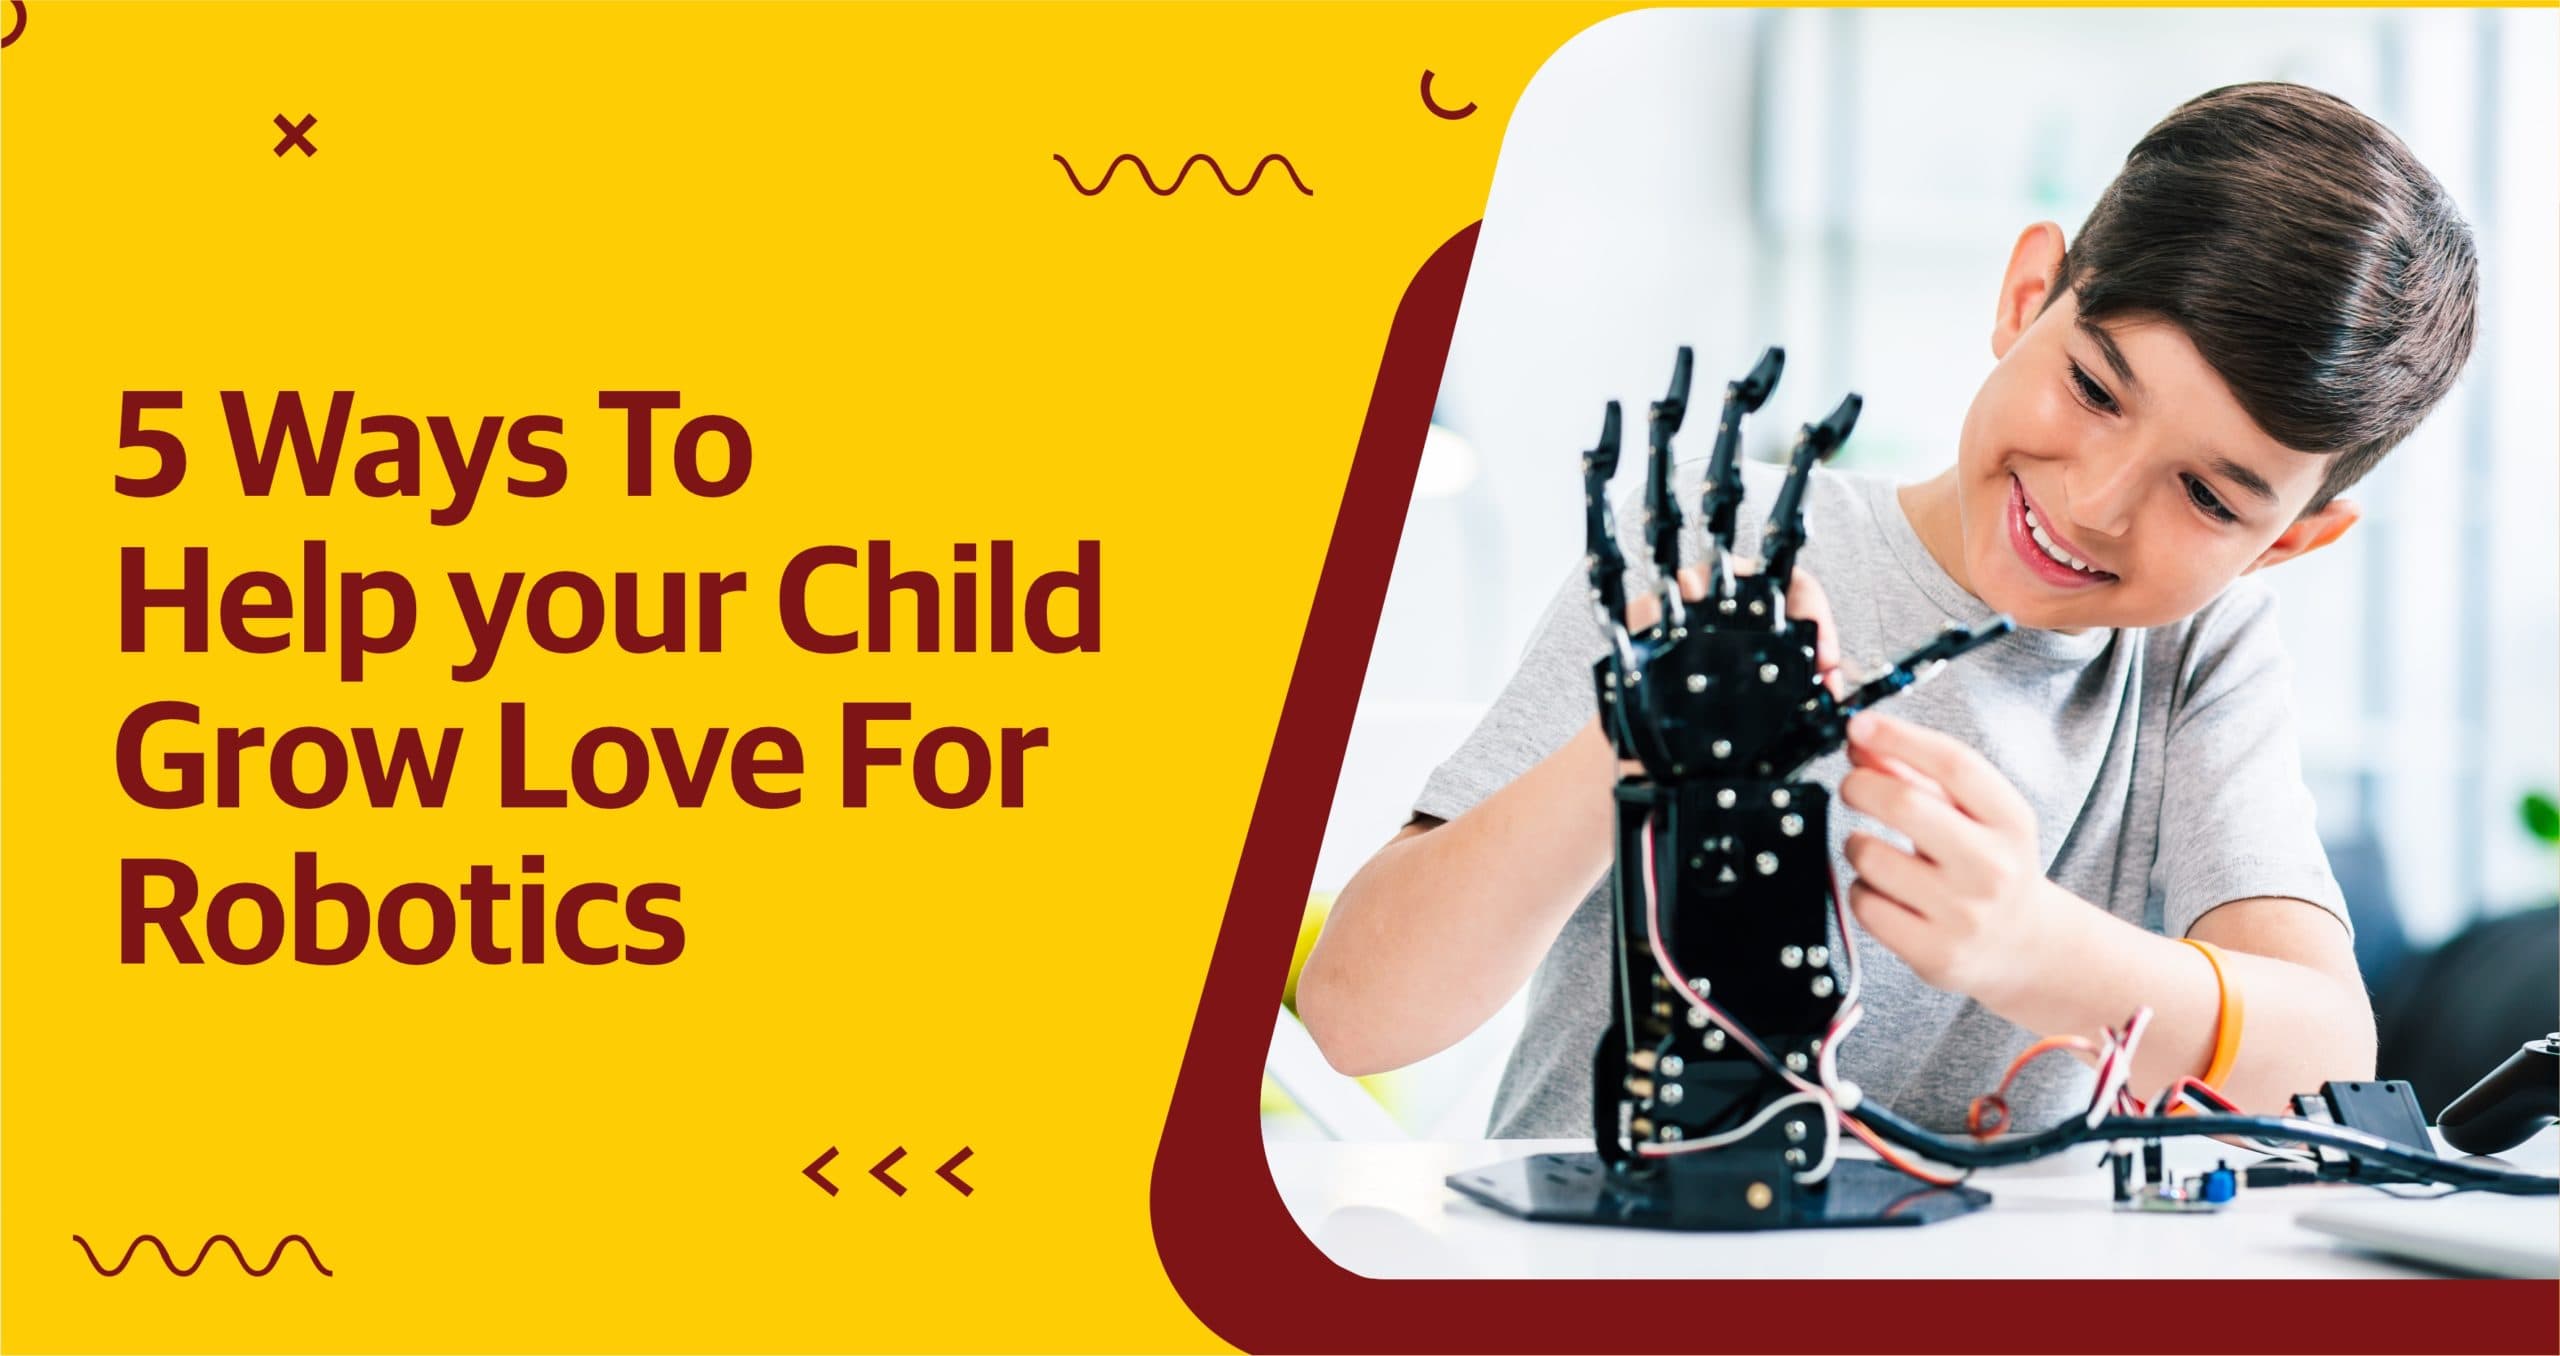 5 Ways To Help your Child Grow Love For Robotics